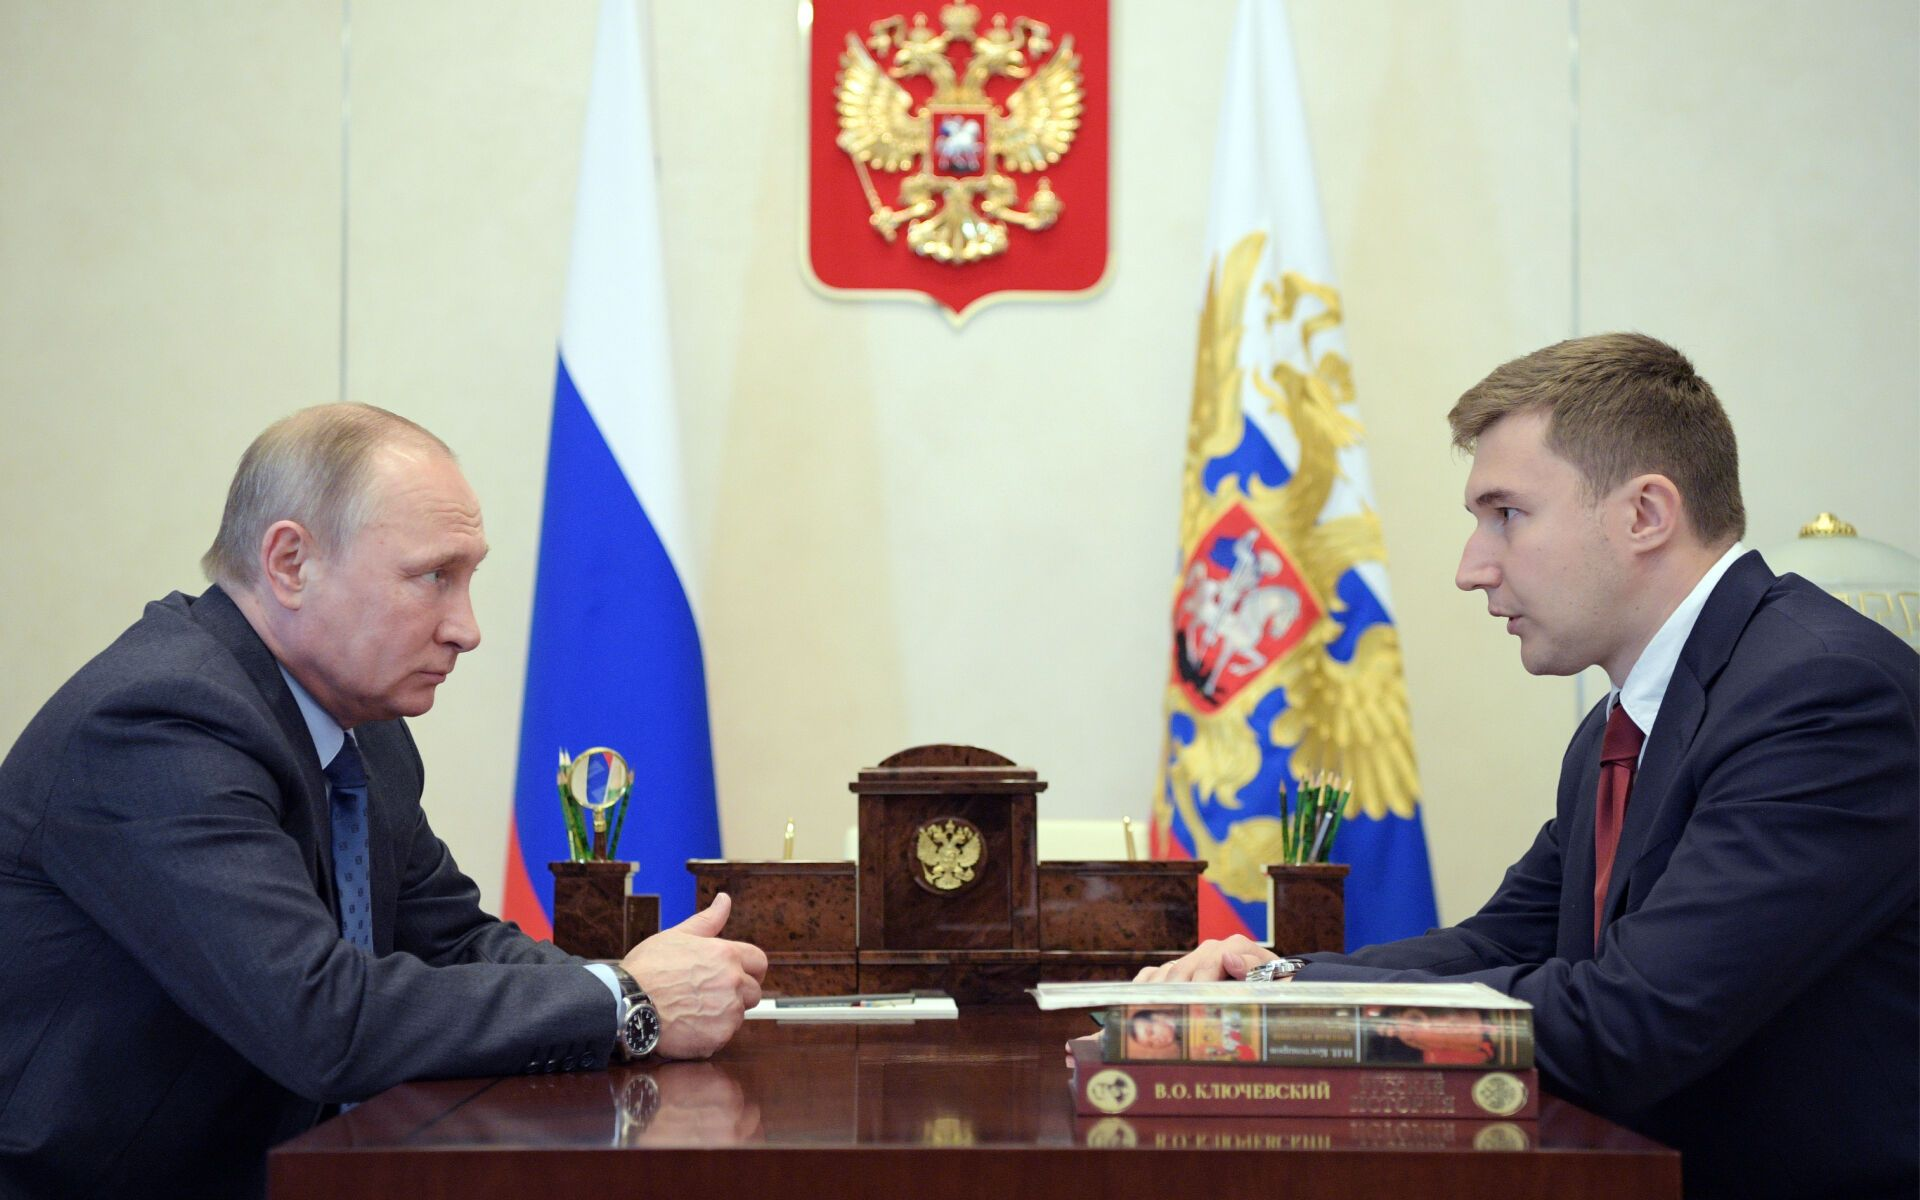 Traitor to Ukraine Karjakin expressed admiration for Putin, calling him a ''great geostrategist''